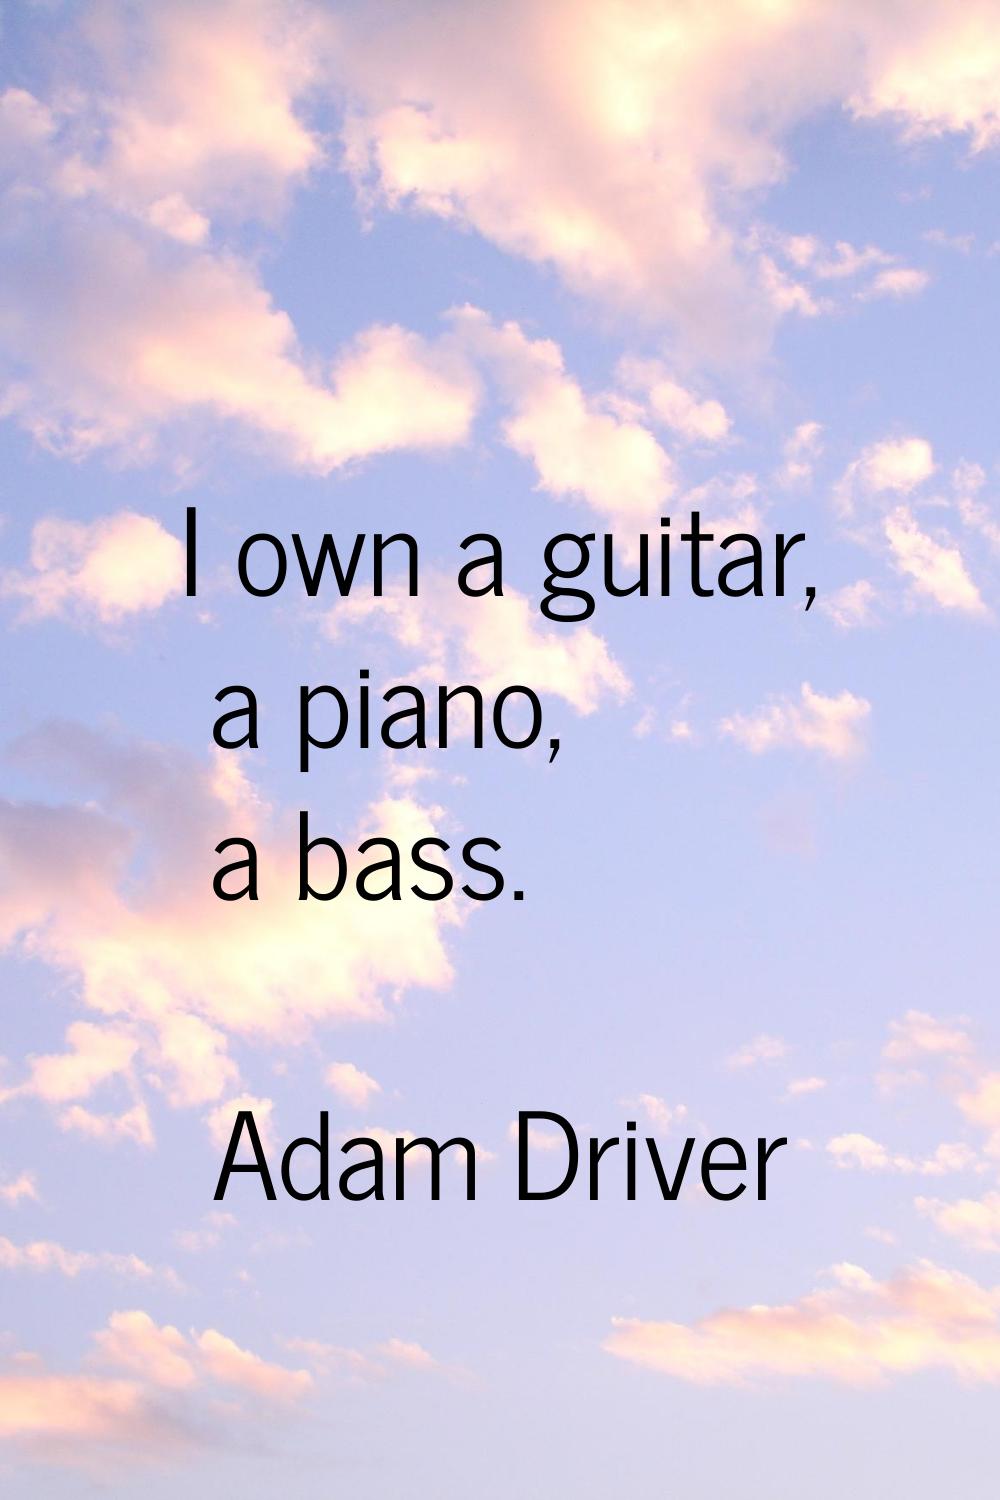 I own a guitar, a piano, a bass.